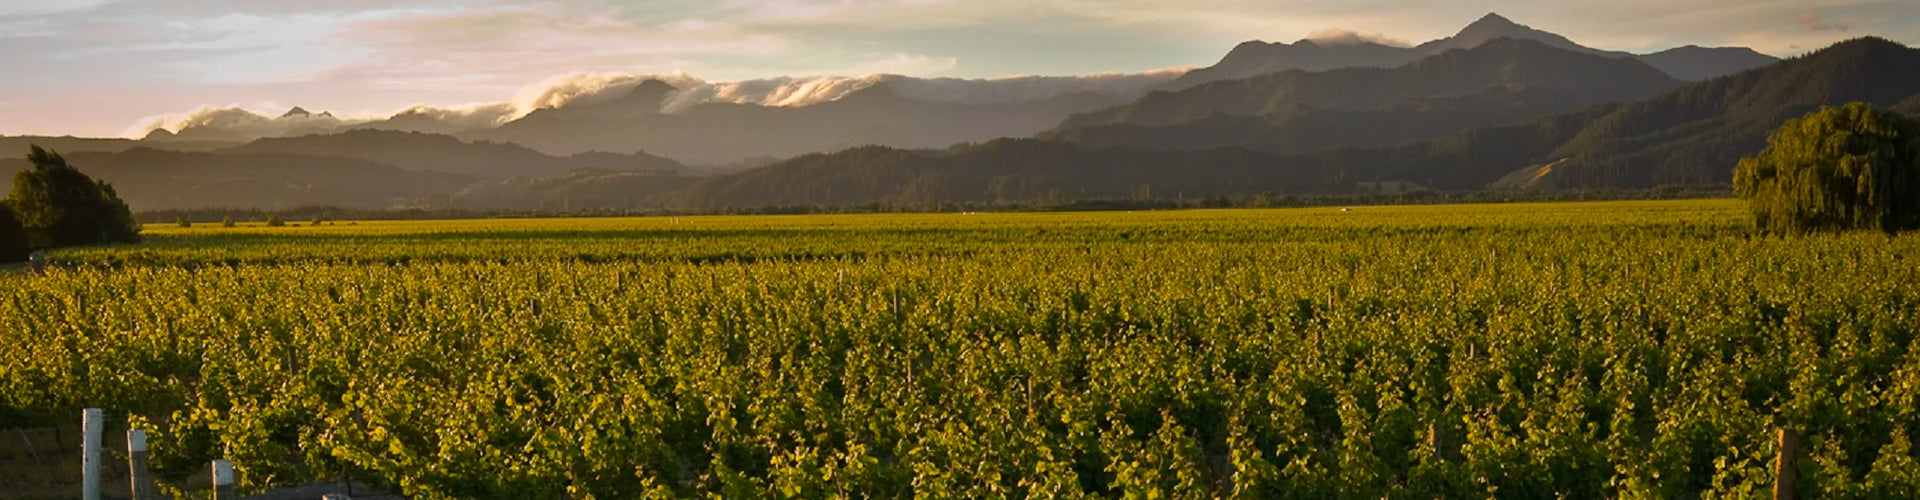 Framingham Vineyards in the Wairau Valley of Marlborough, New Zealand